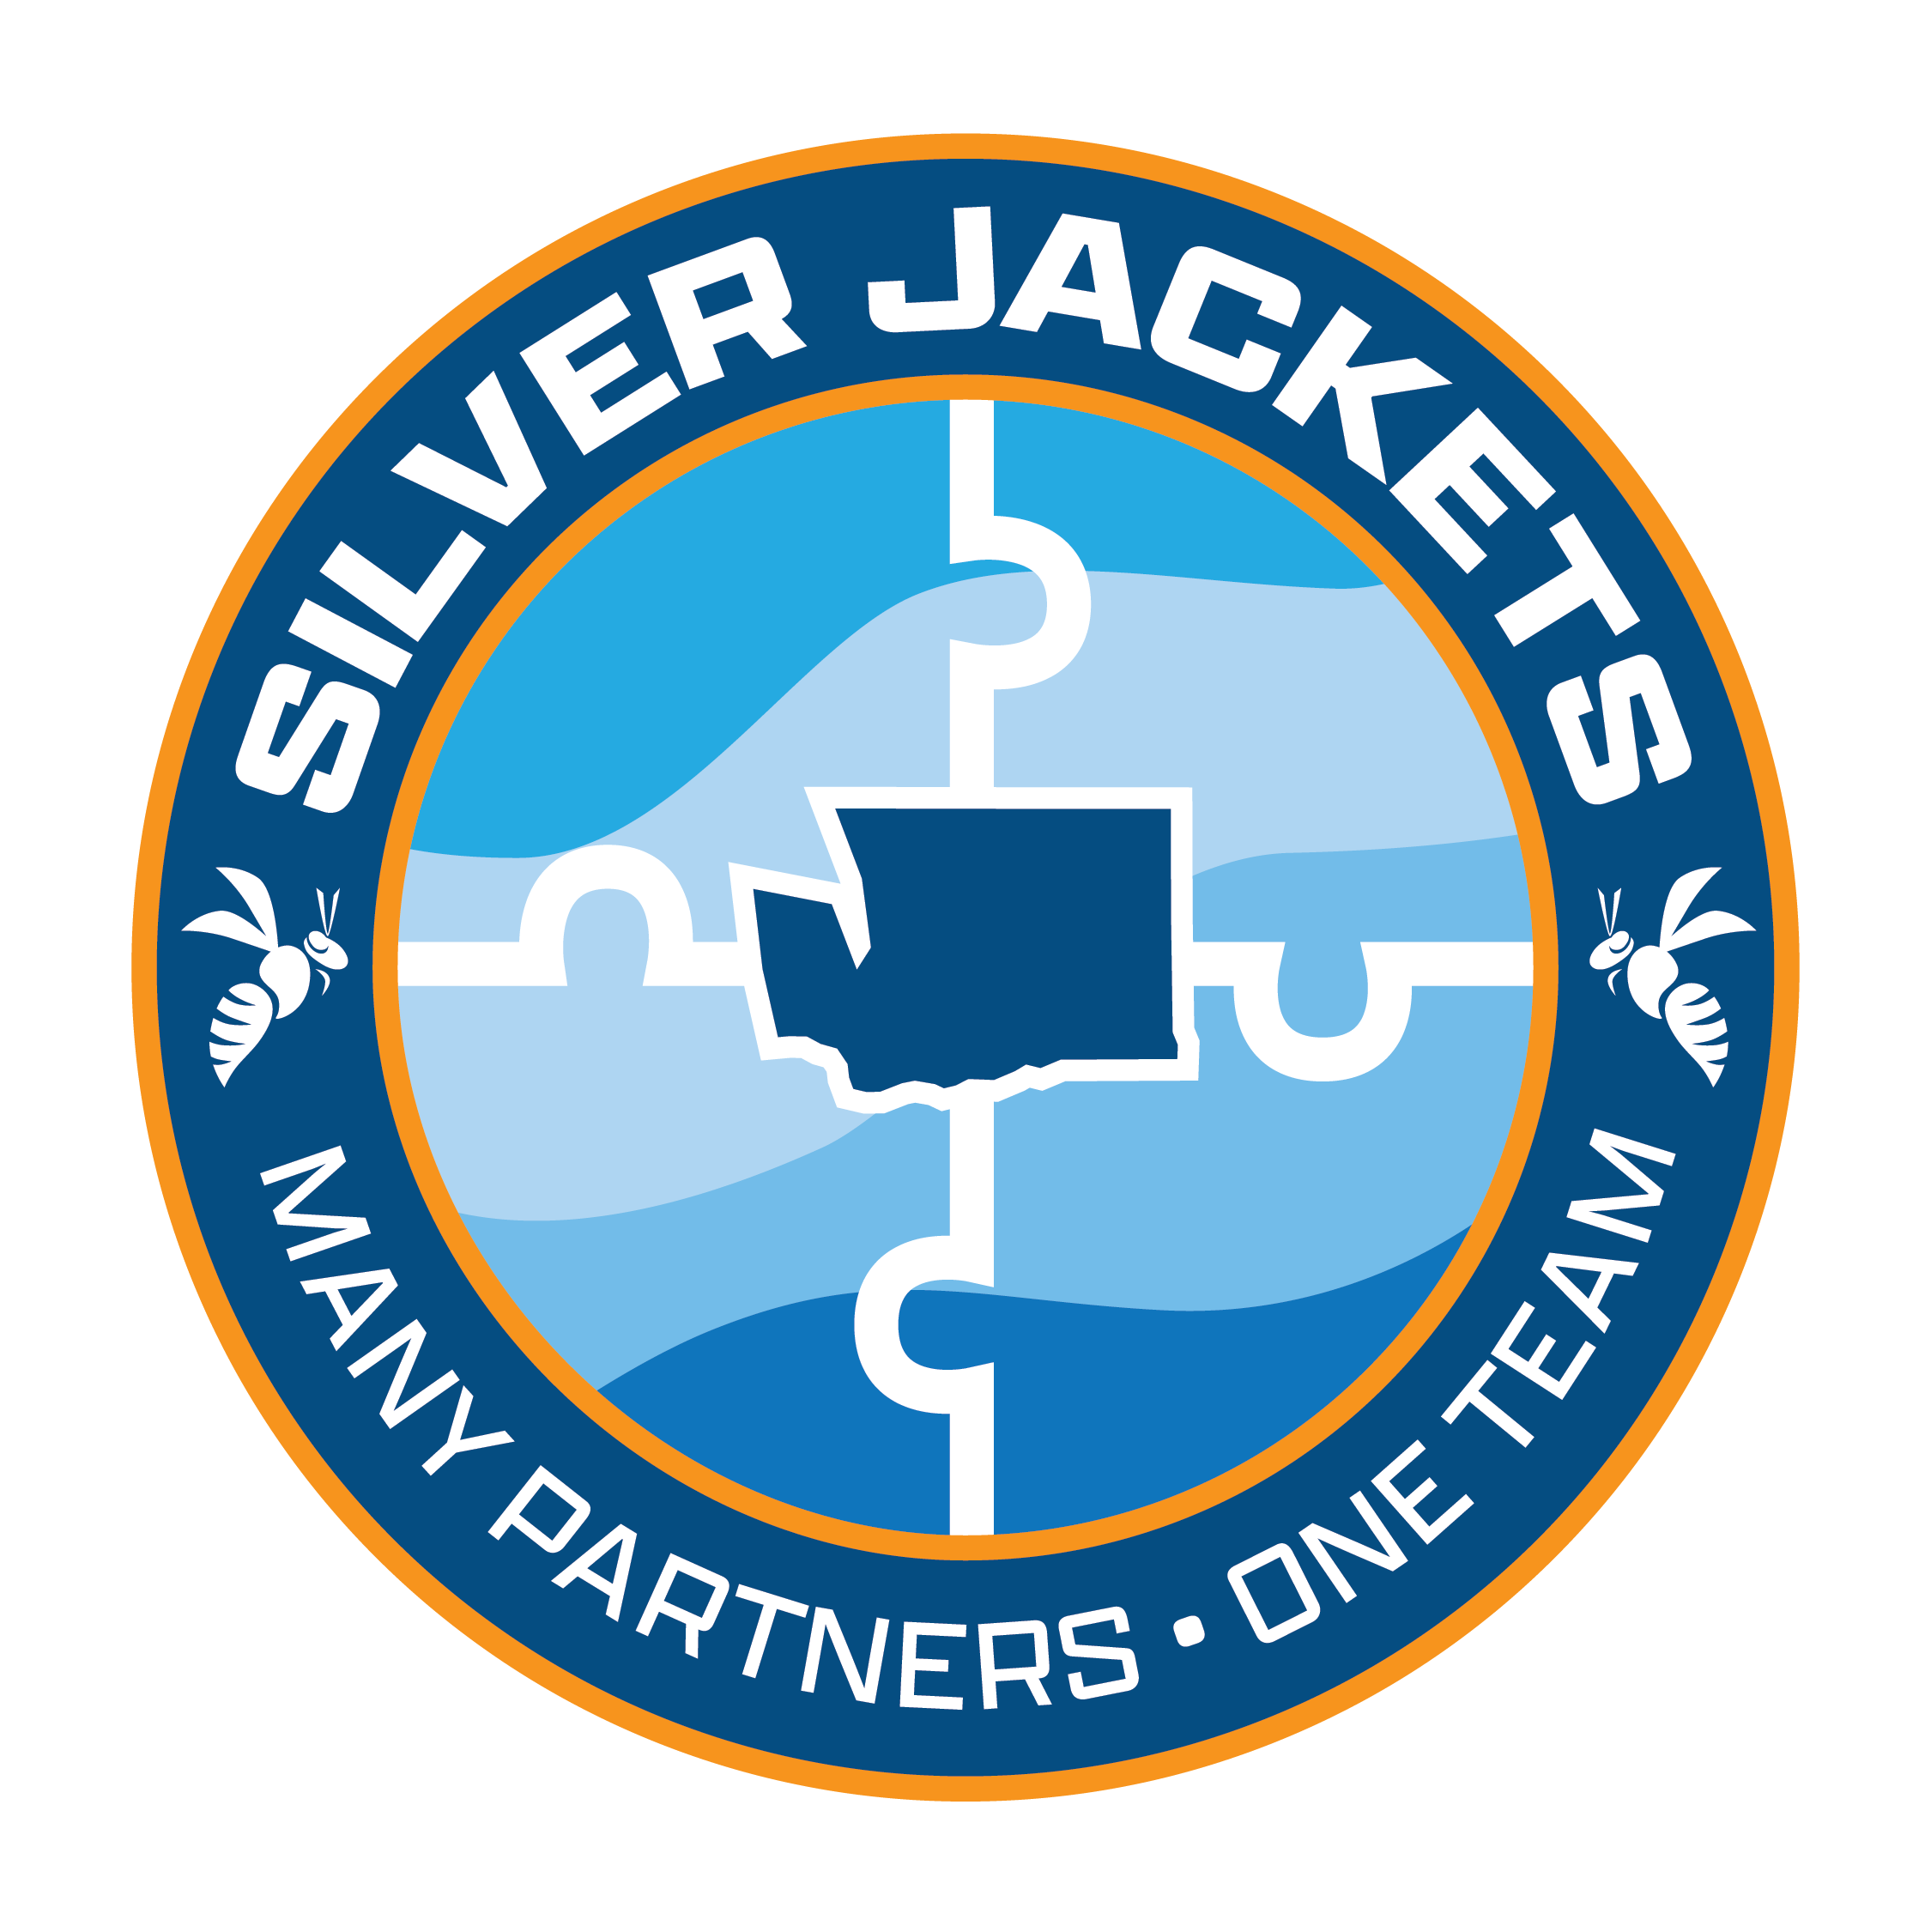 Washington Silver Jackets logo